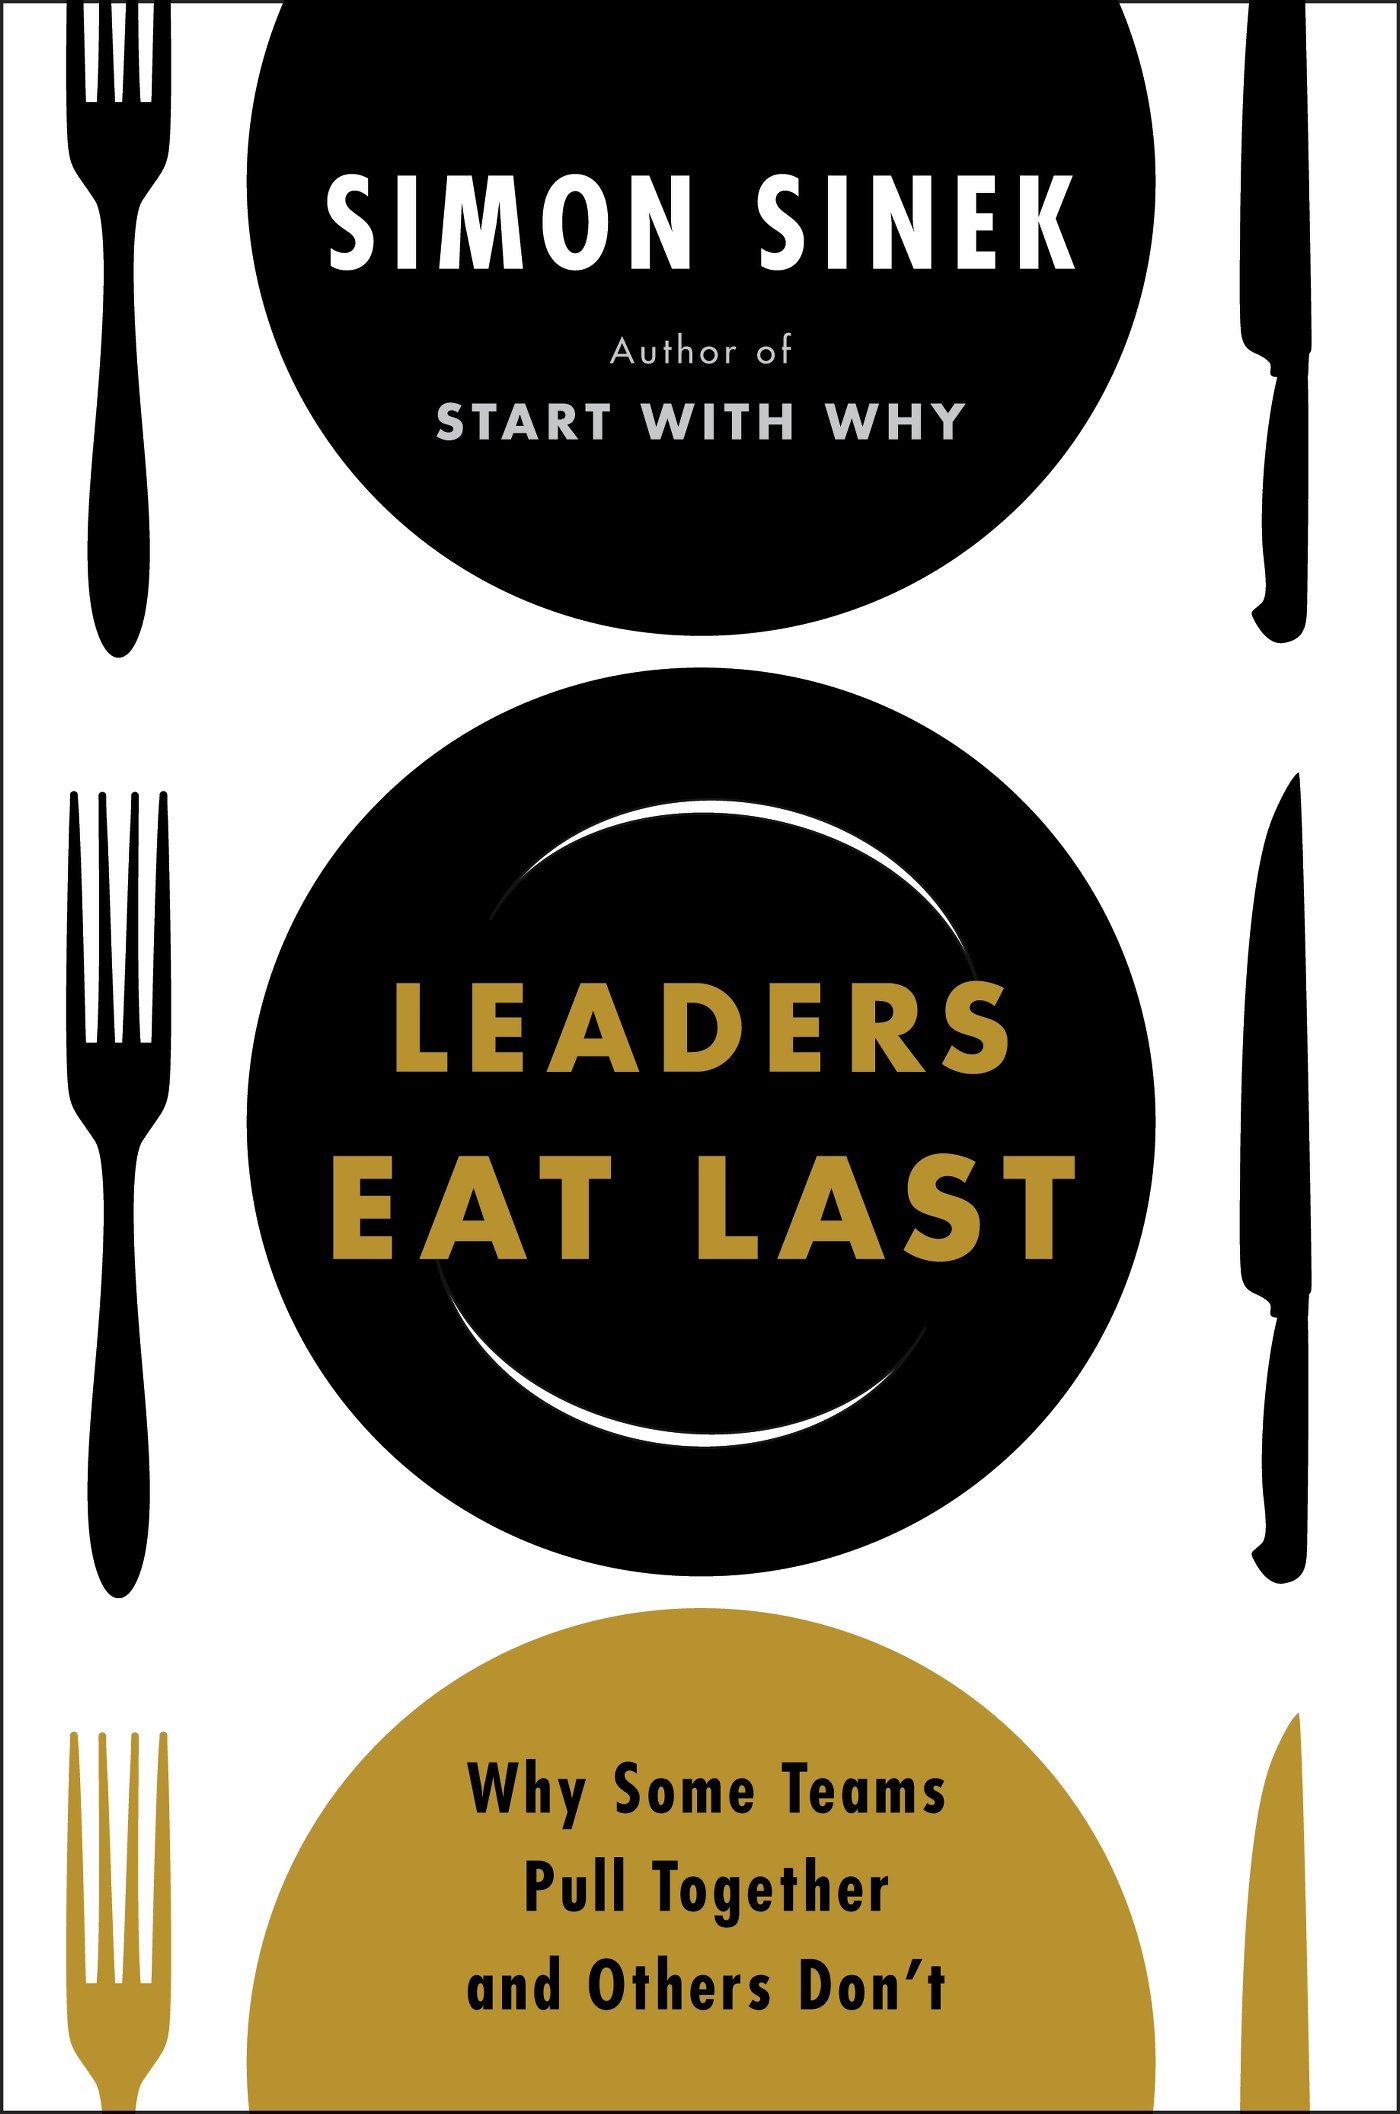 leaders eat last by simon sinek audio book summary